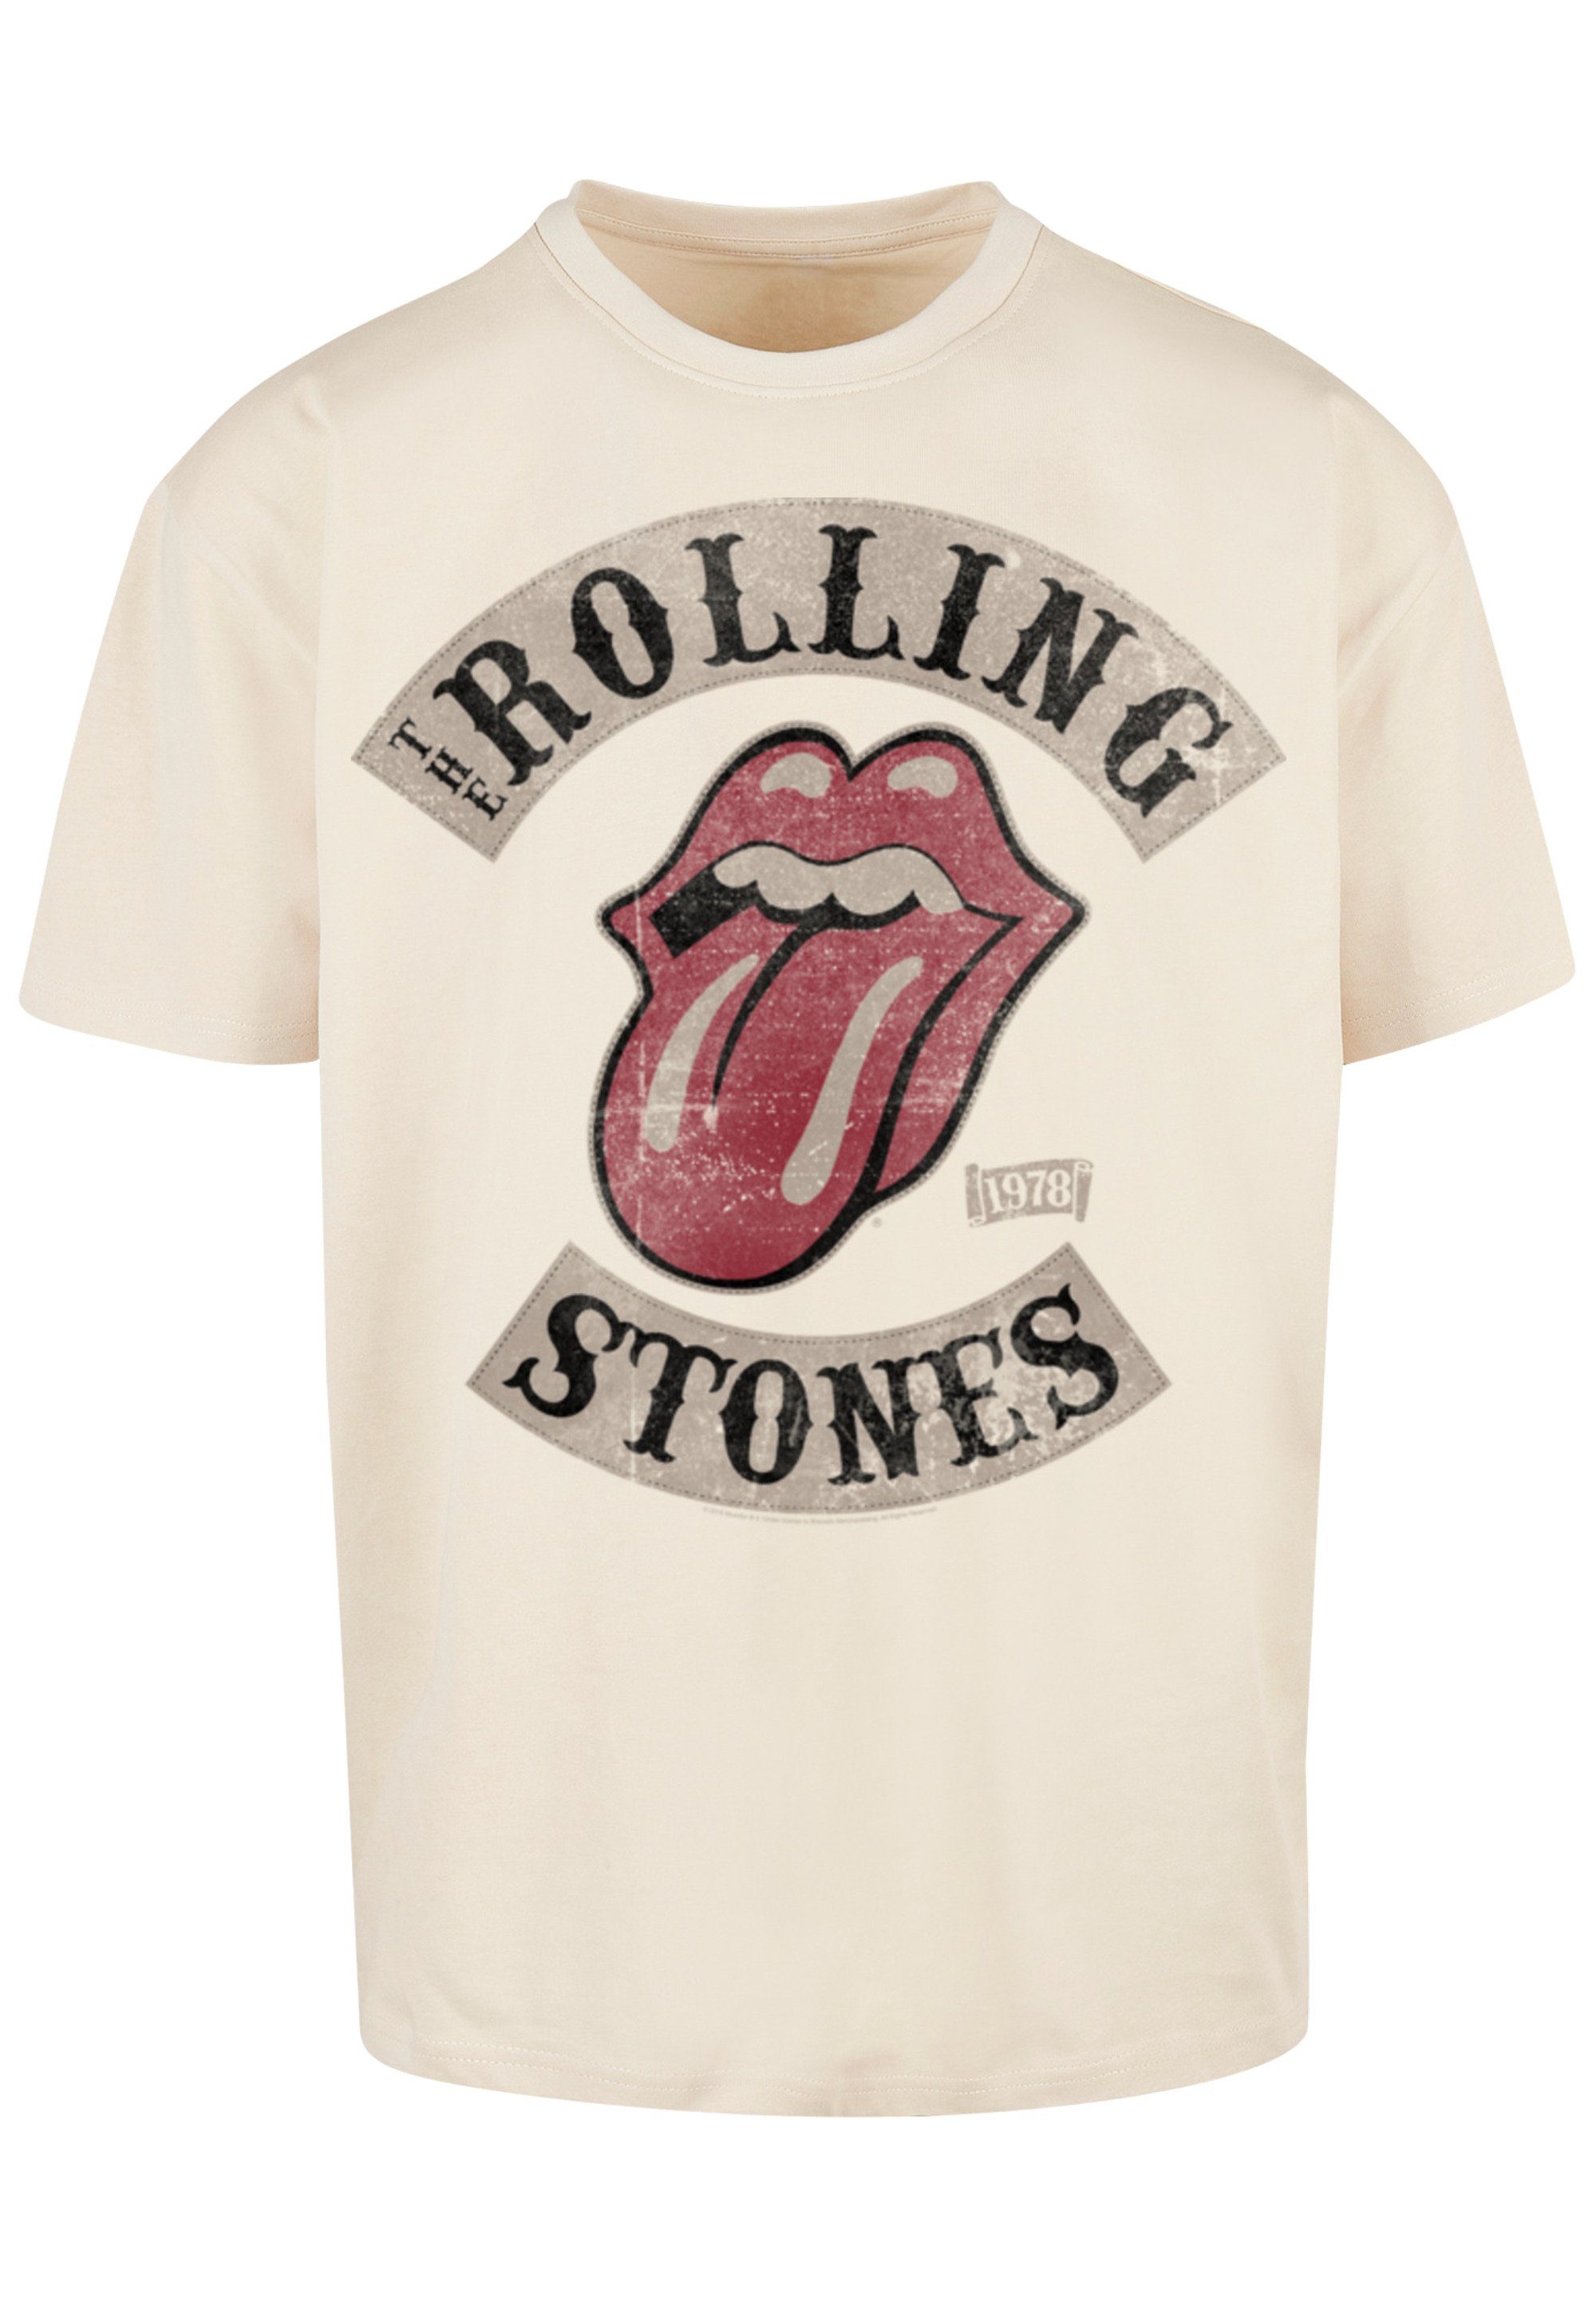 Rolling Stones Print The SIZE F4NT4STIC PLUS T-Shirt '78 Tour sand